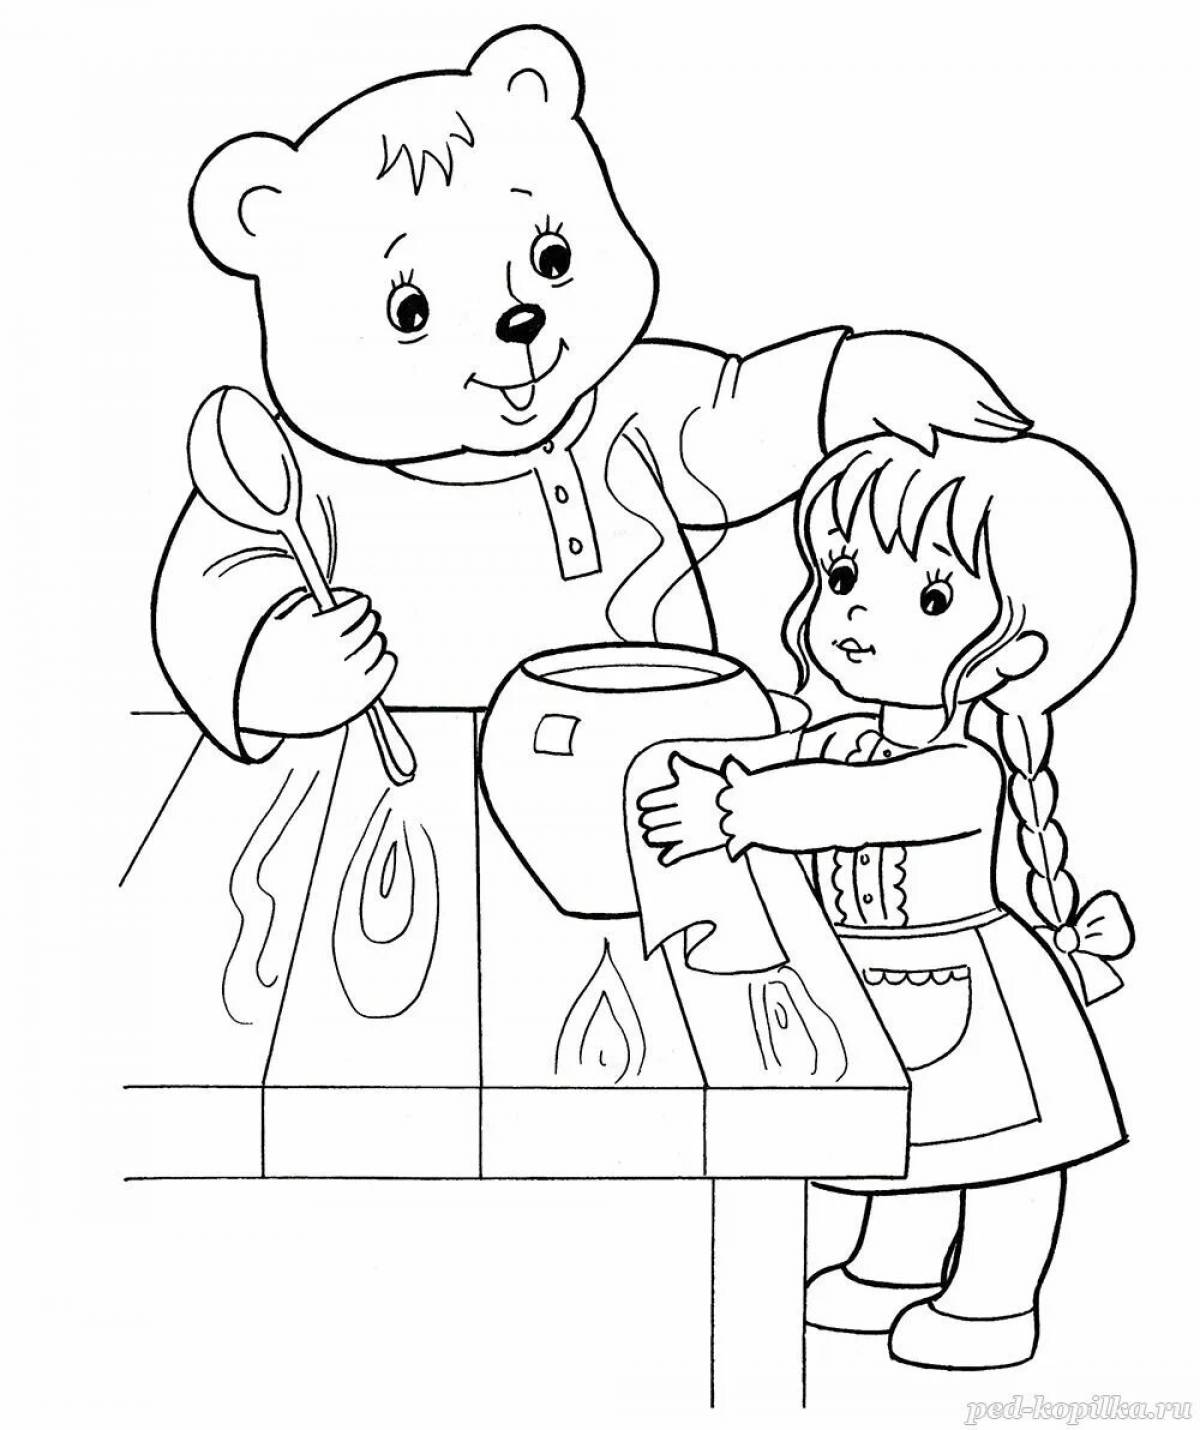 Masha and the bear fairy tale for kids #2